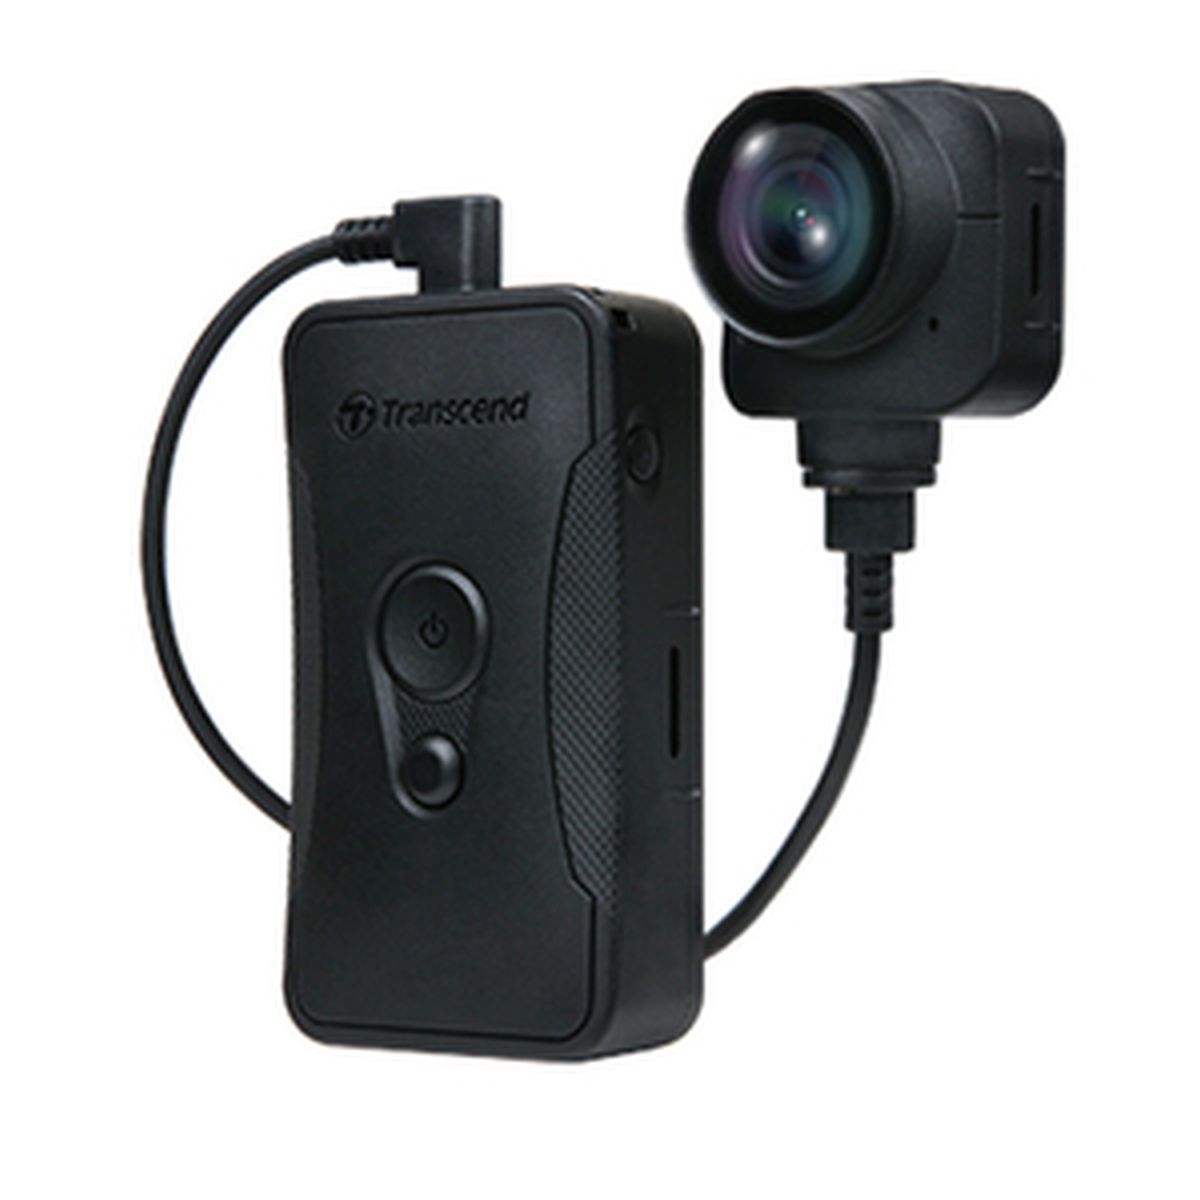 Transcend DrivePro Body 70 64 GB RAM WiFi + Bluetooth, Bodycam